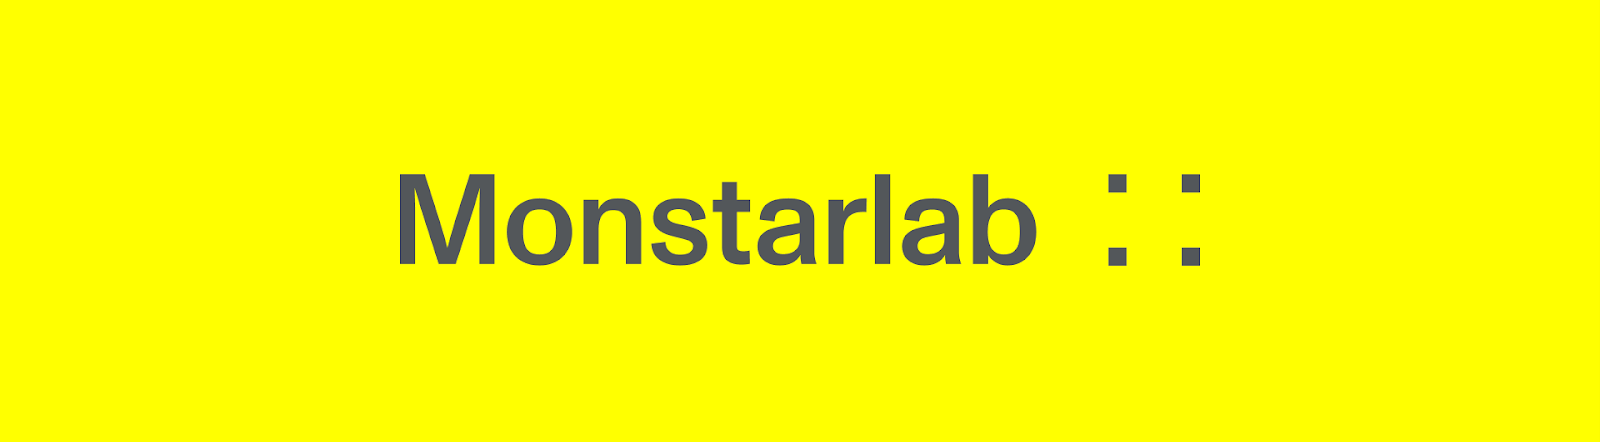 monstarlab 黄底灰字logo